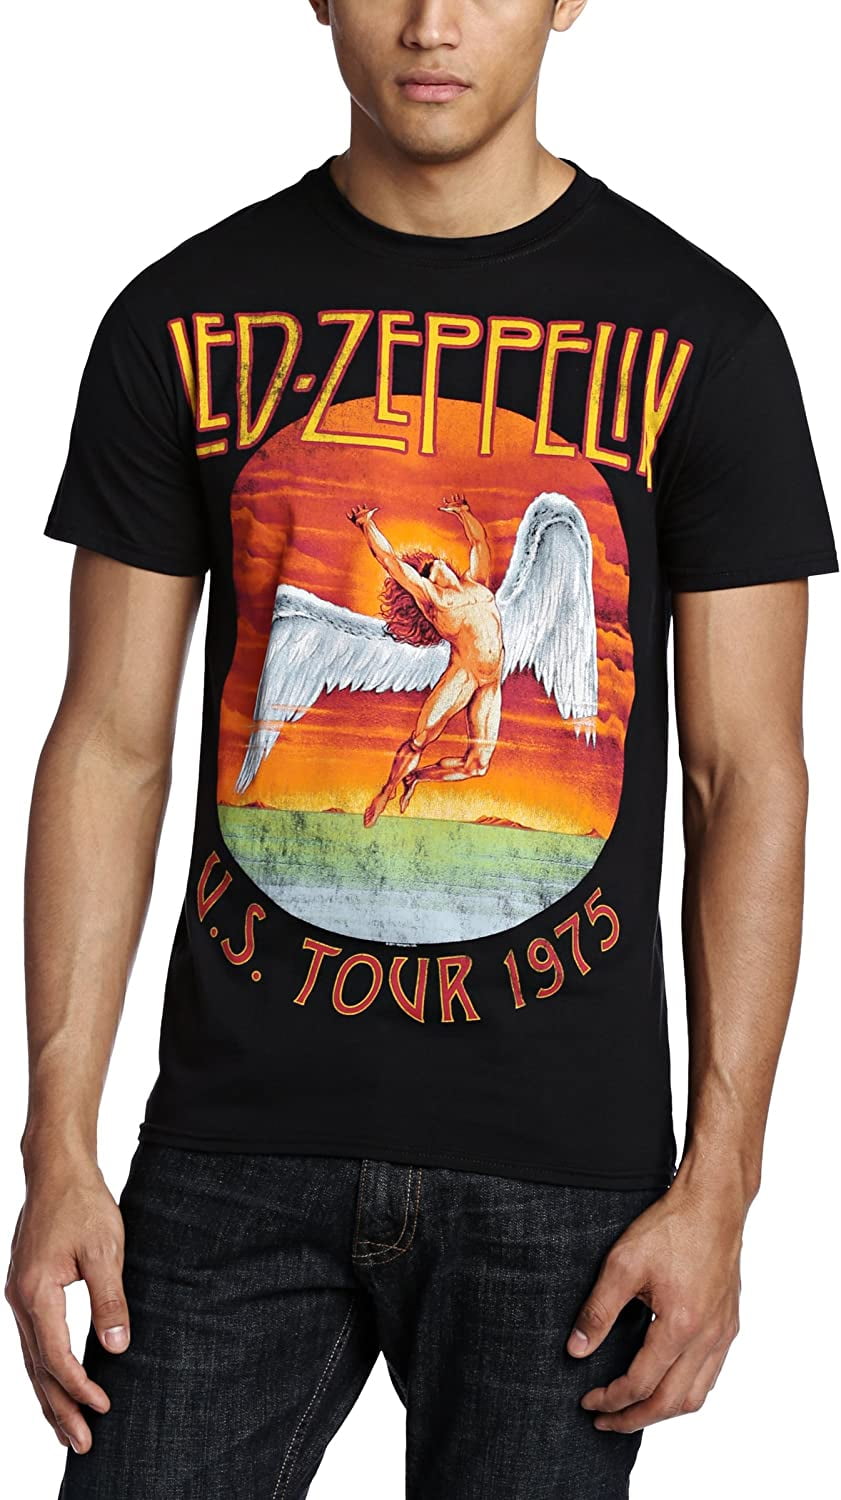 HIFI - Led Zeppelin Men's USA Tour 1975 T-Shirt Black - Walmart.com - Walmart.com